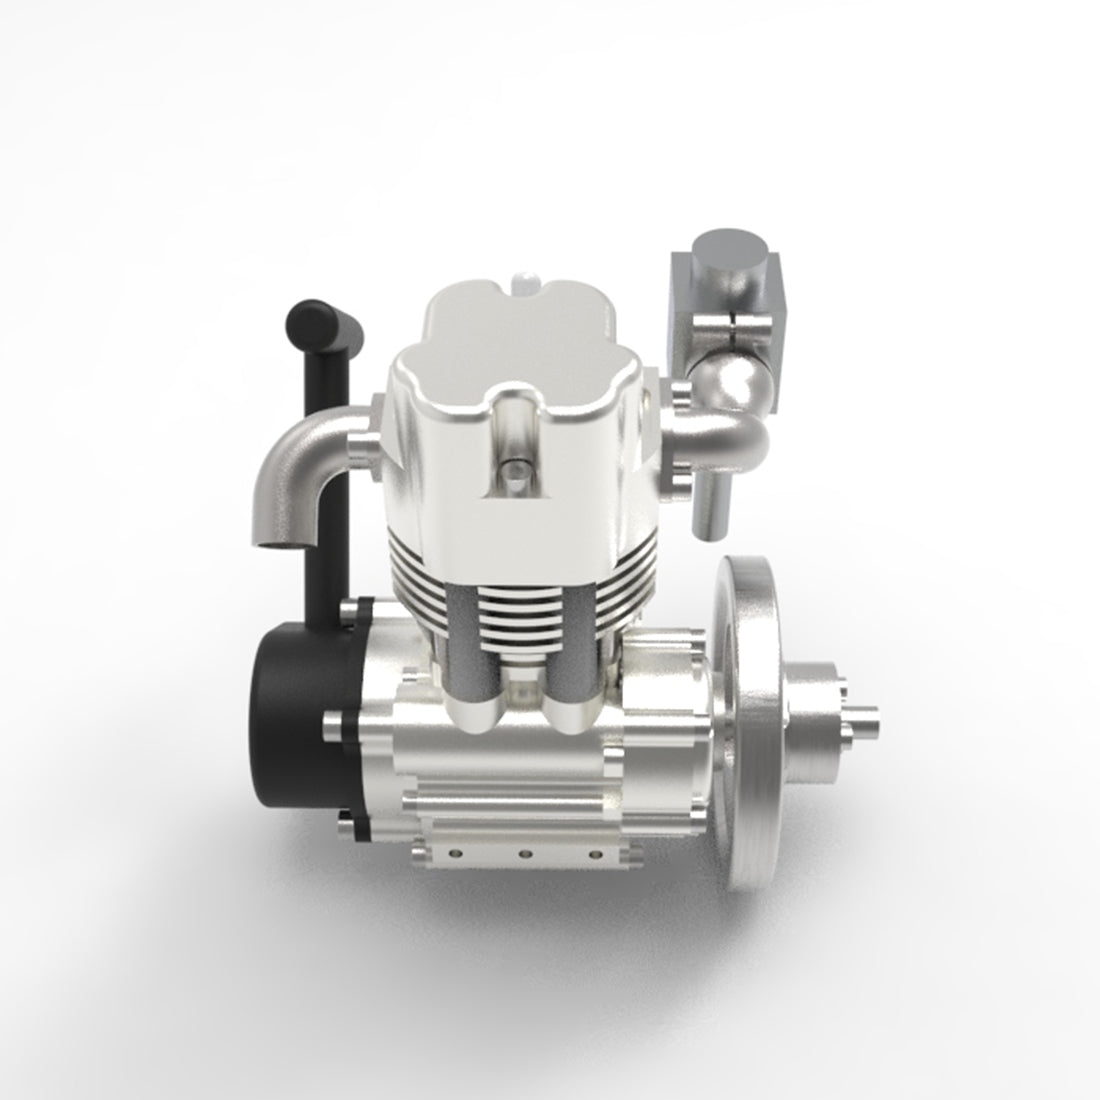 ENJOMOR GS-DK01 4 Stroke Single Cylinder Gas Power Engine RTR 14000rpm 8cc